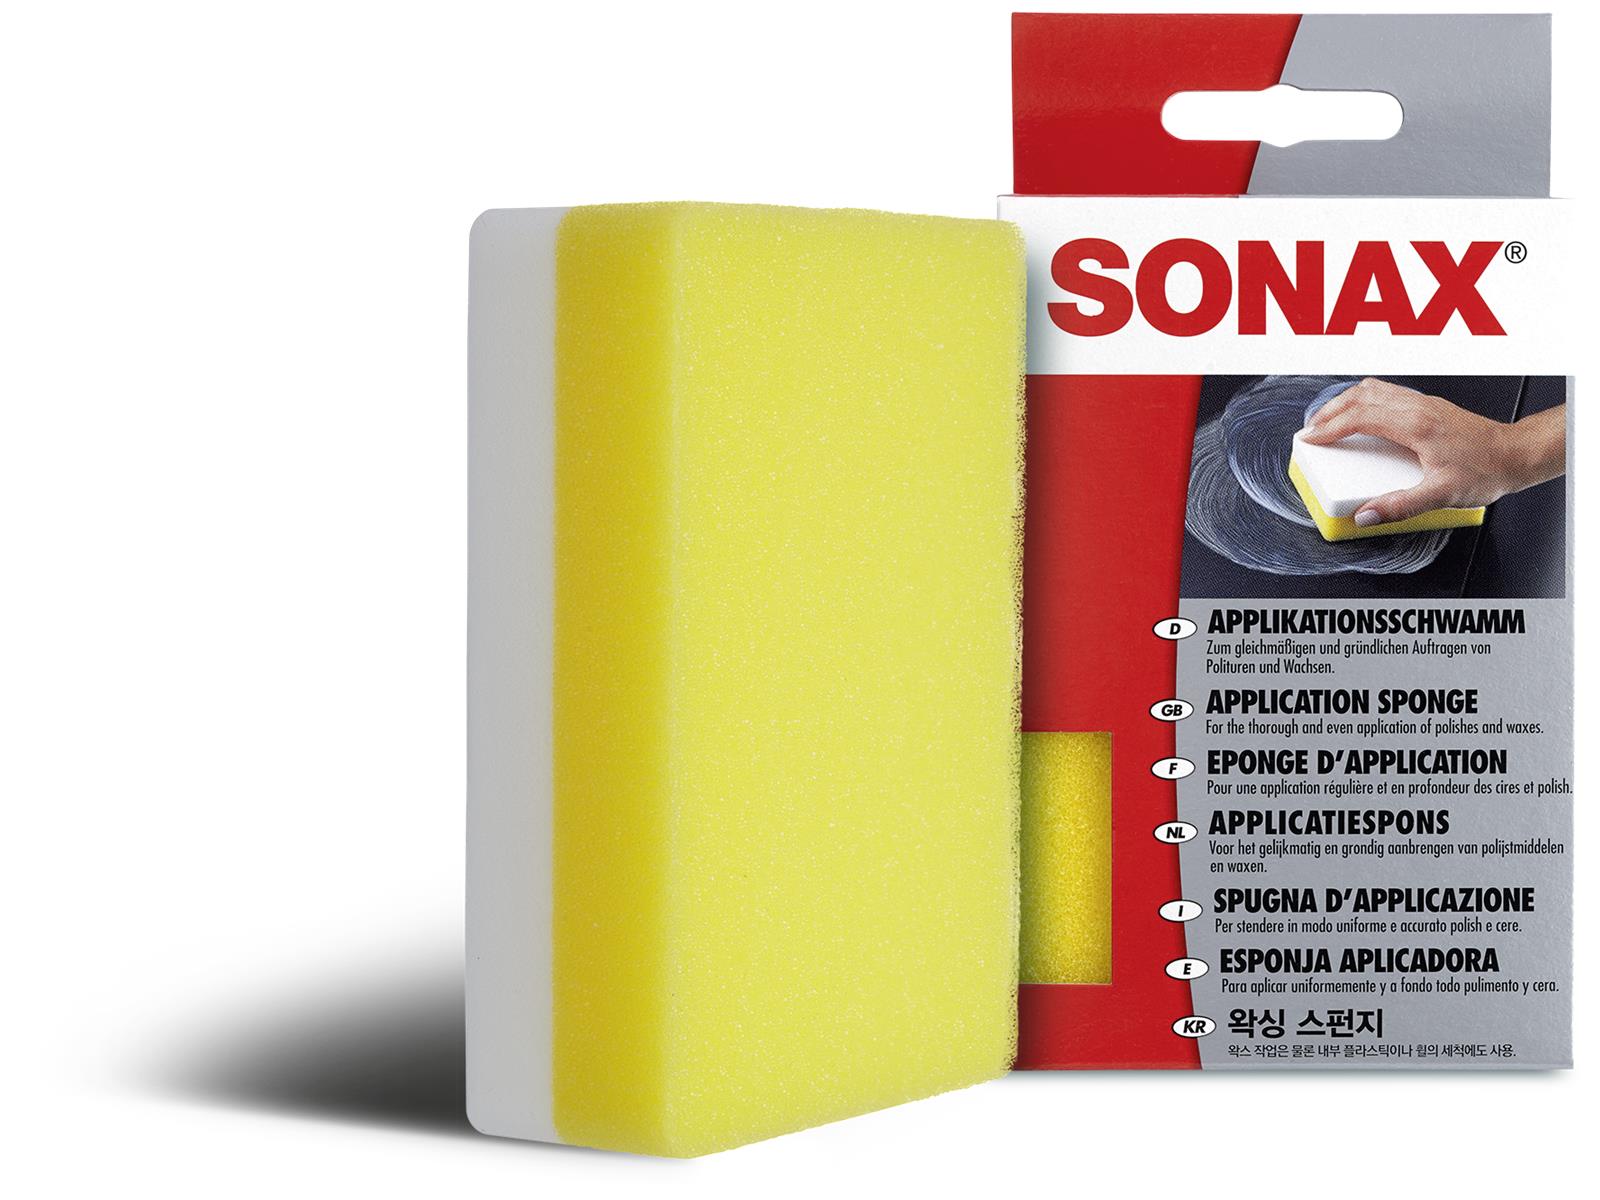 SONAX 04173000 ApplikationsSchwamm 1 Stück